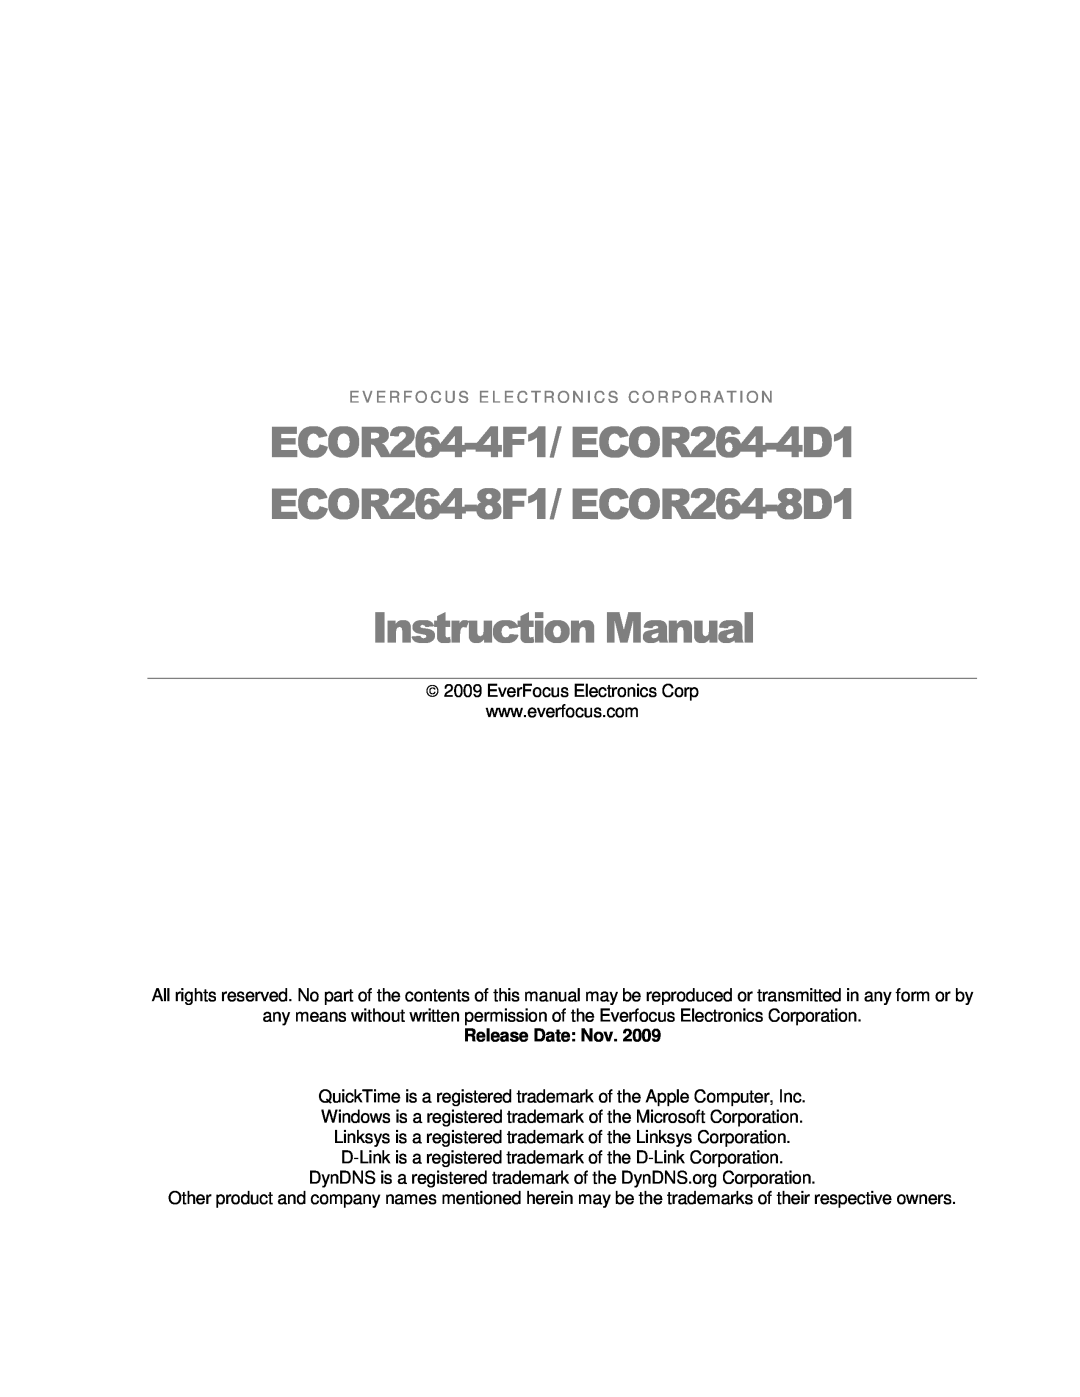 EverFocus user manual ECOR264-4F1/ ECOR264-4D1 ECOR264-8F1/ ECOR264-8D1 Instruction Manual, Release Date Nov 